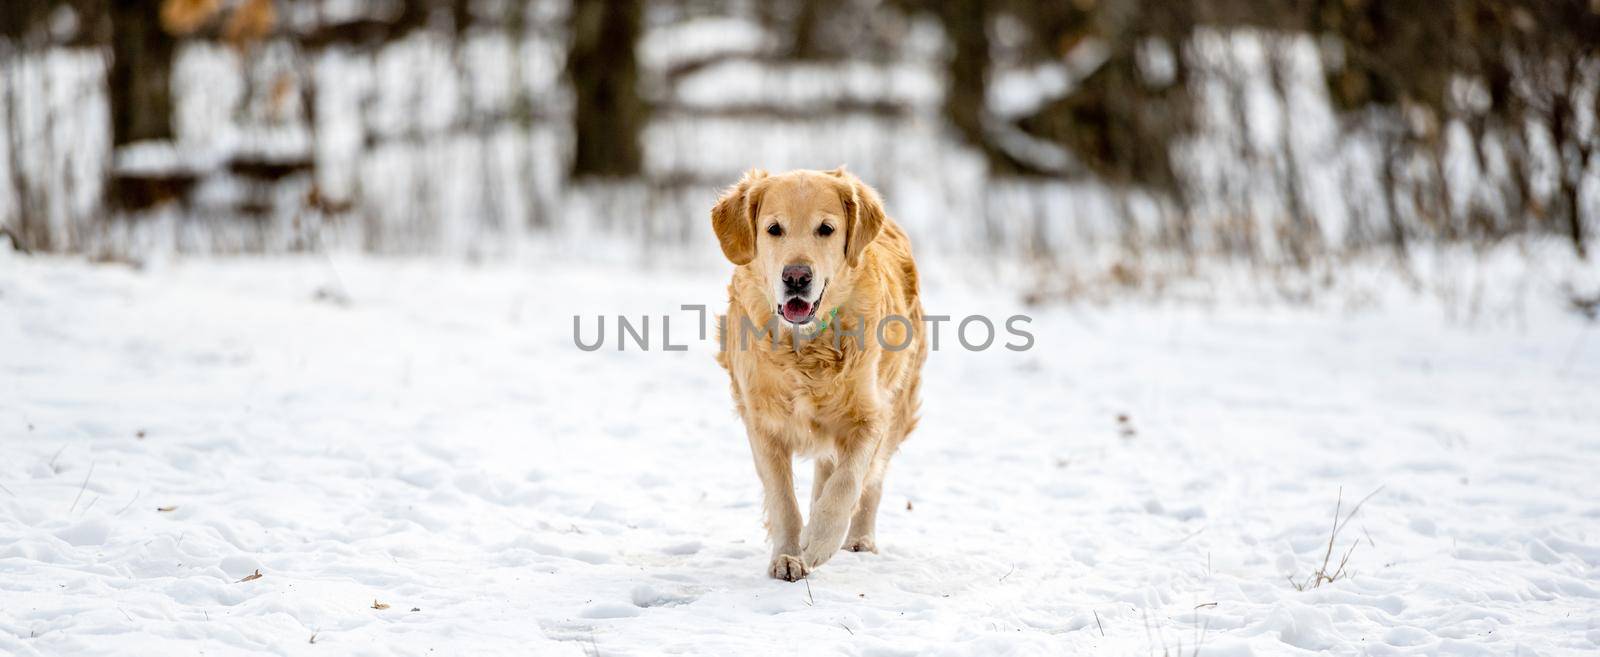 Golden retriever dog running in the snow. Dog in the winter landscape